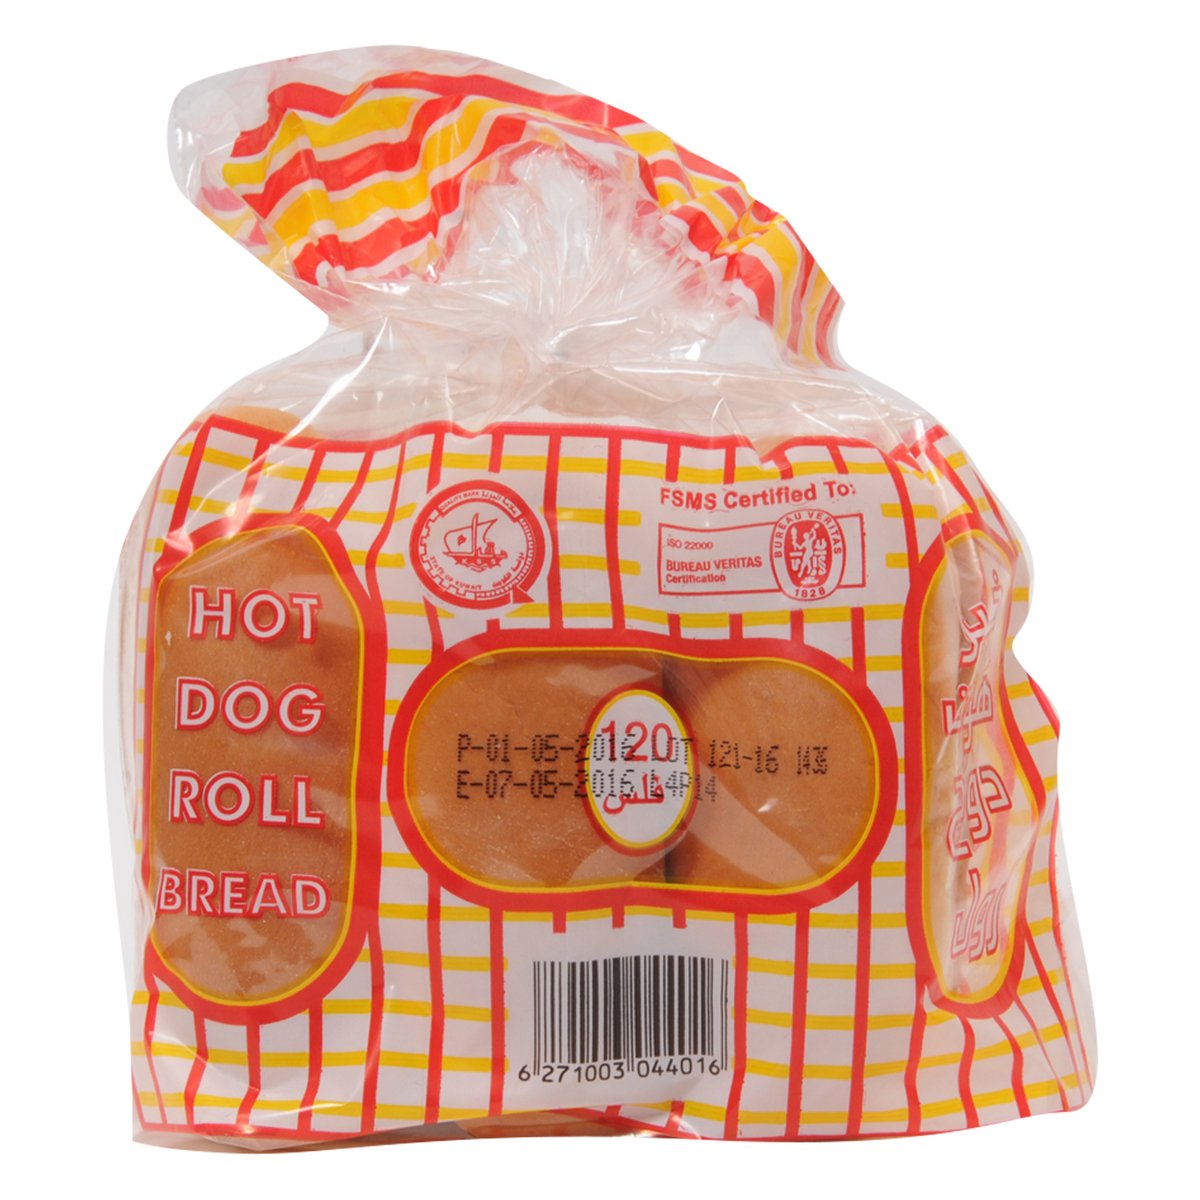 KFMBC Hot Dog Roll Bread 240 g